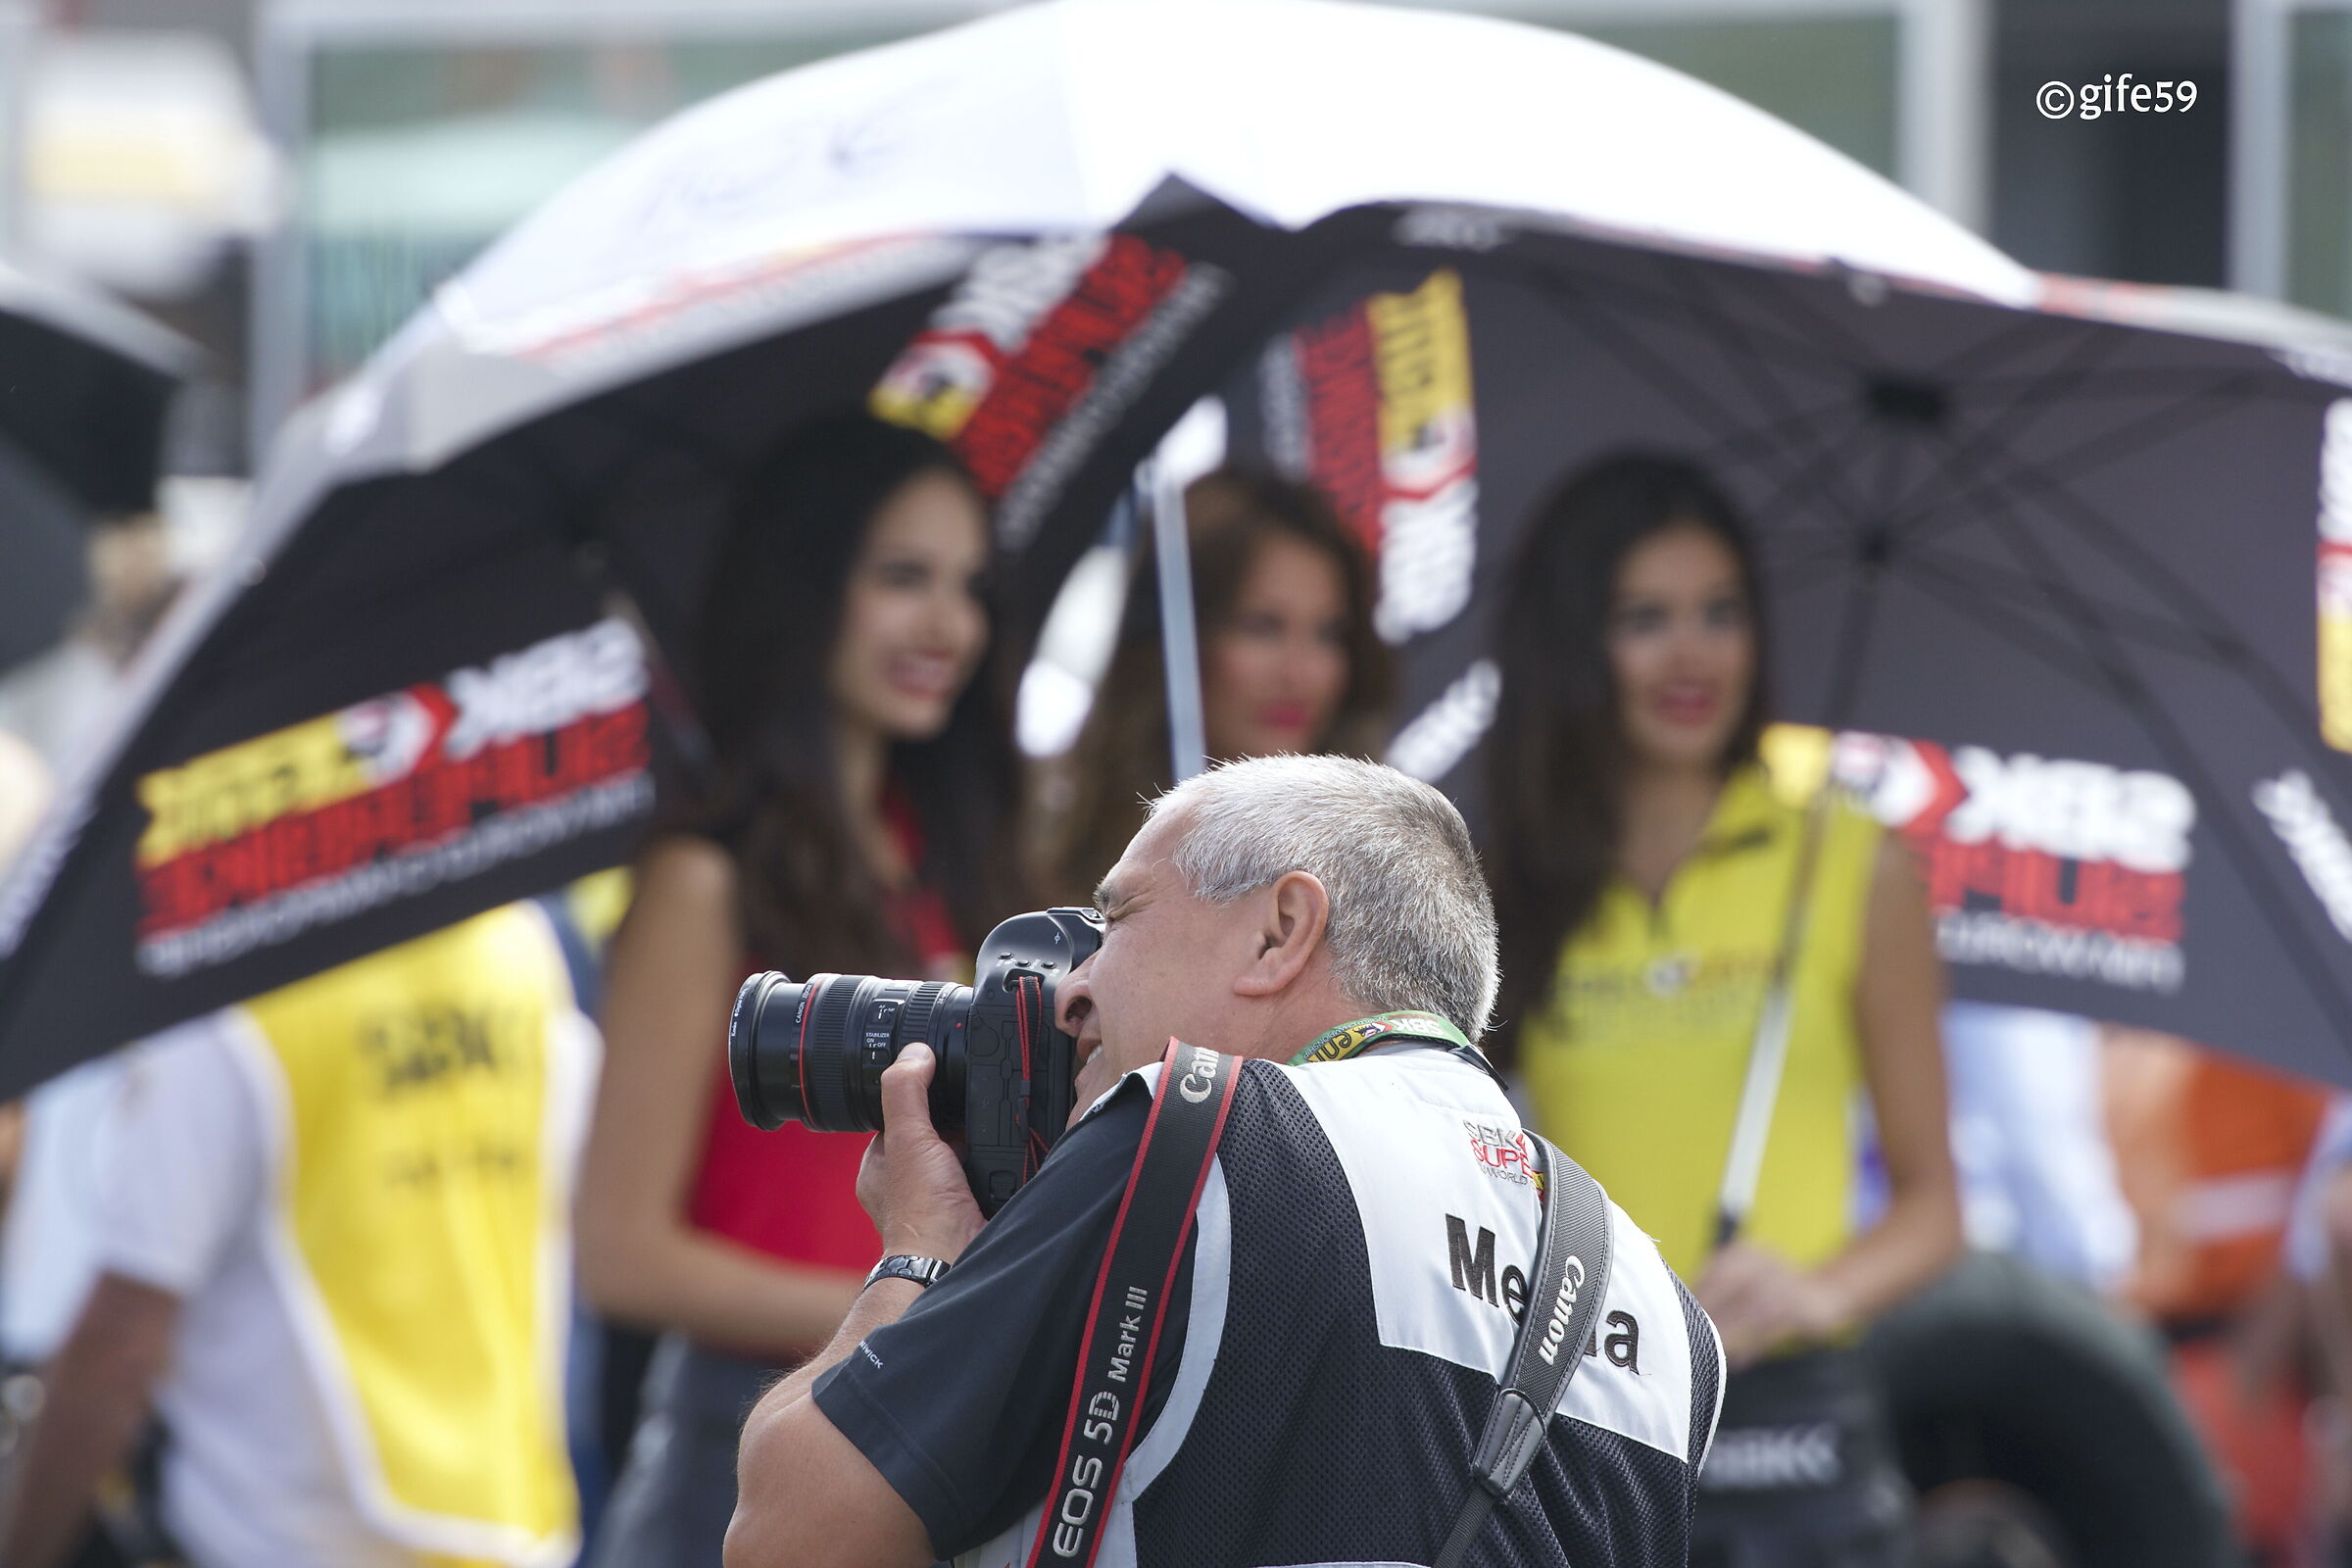 The motorsport photographer...